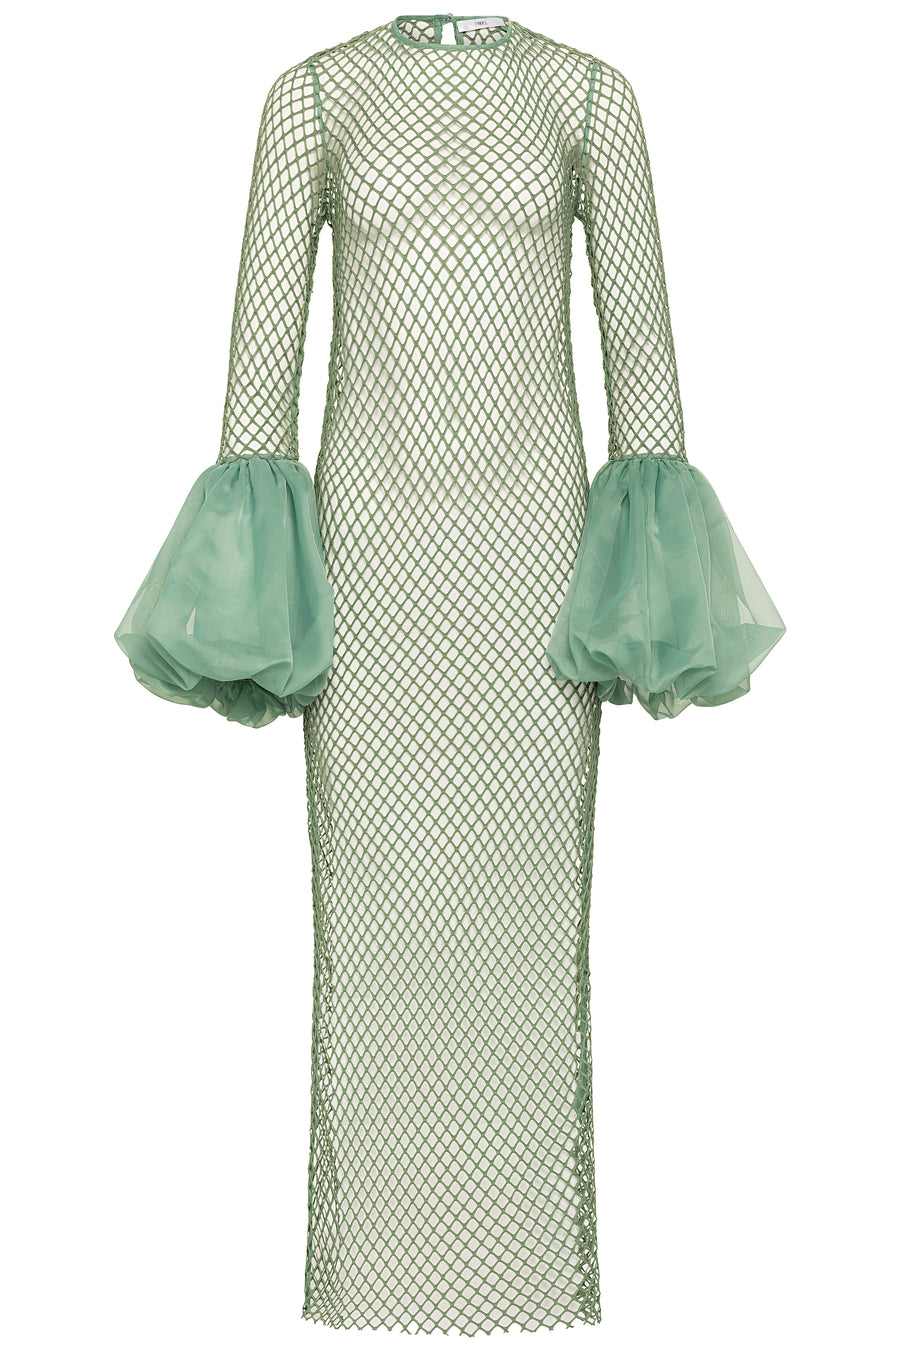 Lola Netted Dress Jade